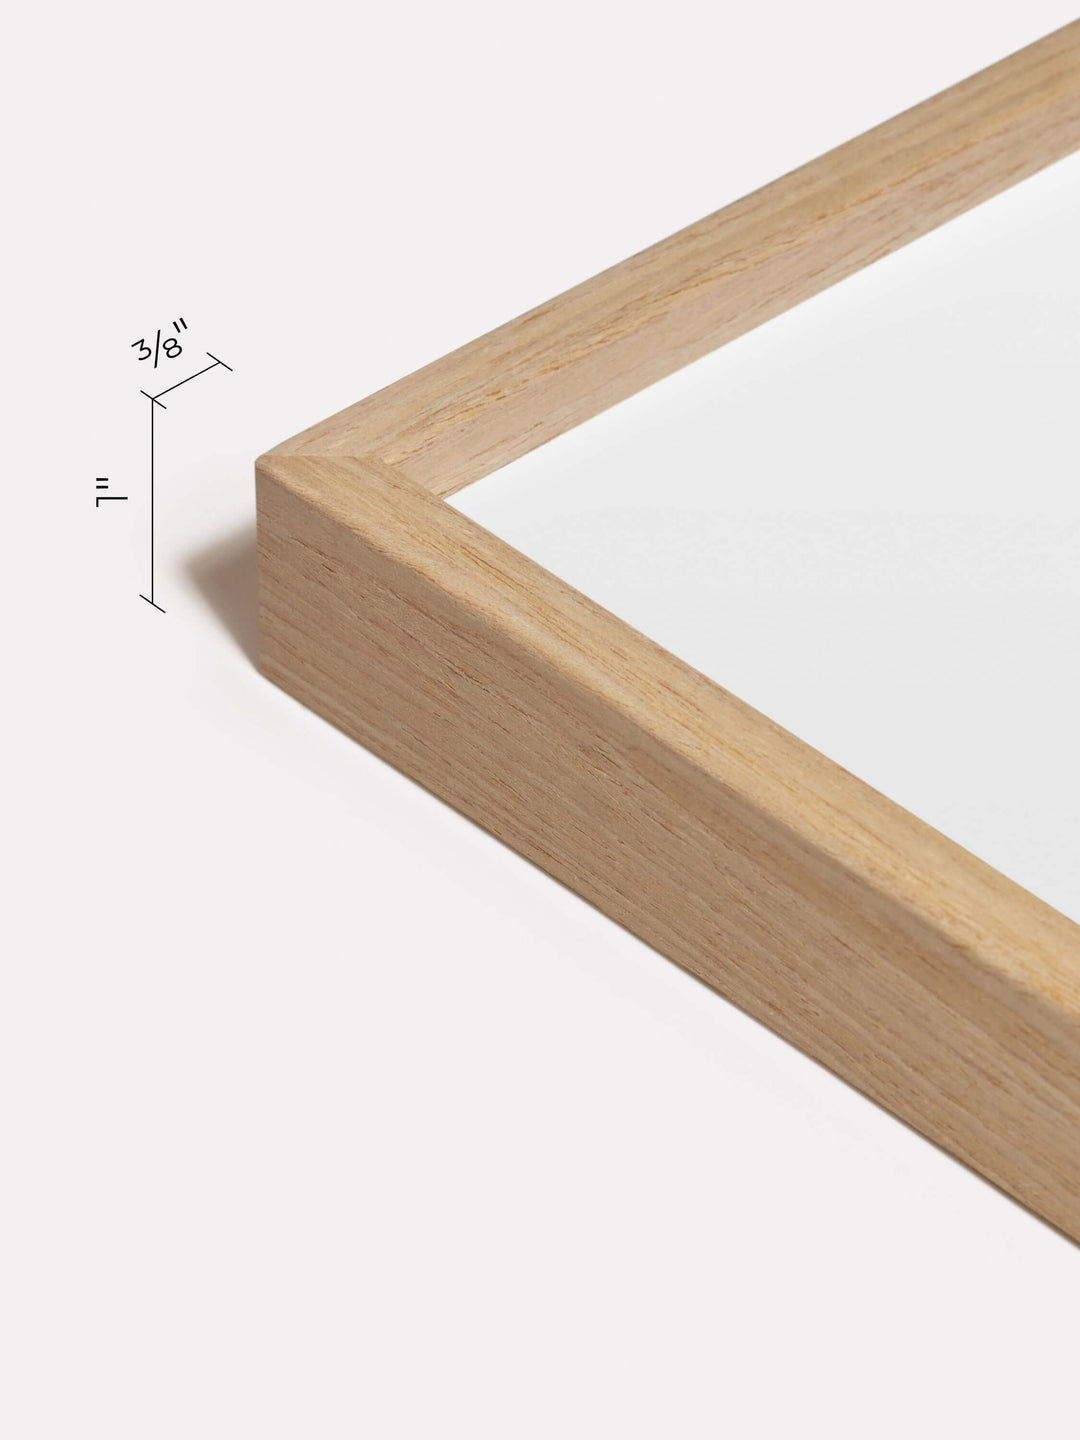 20x30-inch Thin Frame, Oak - Close-up view